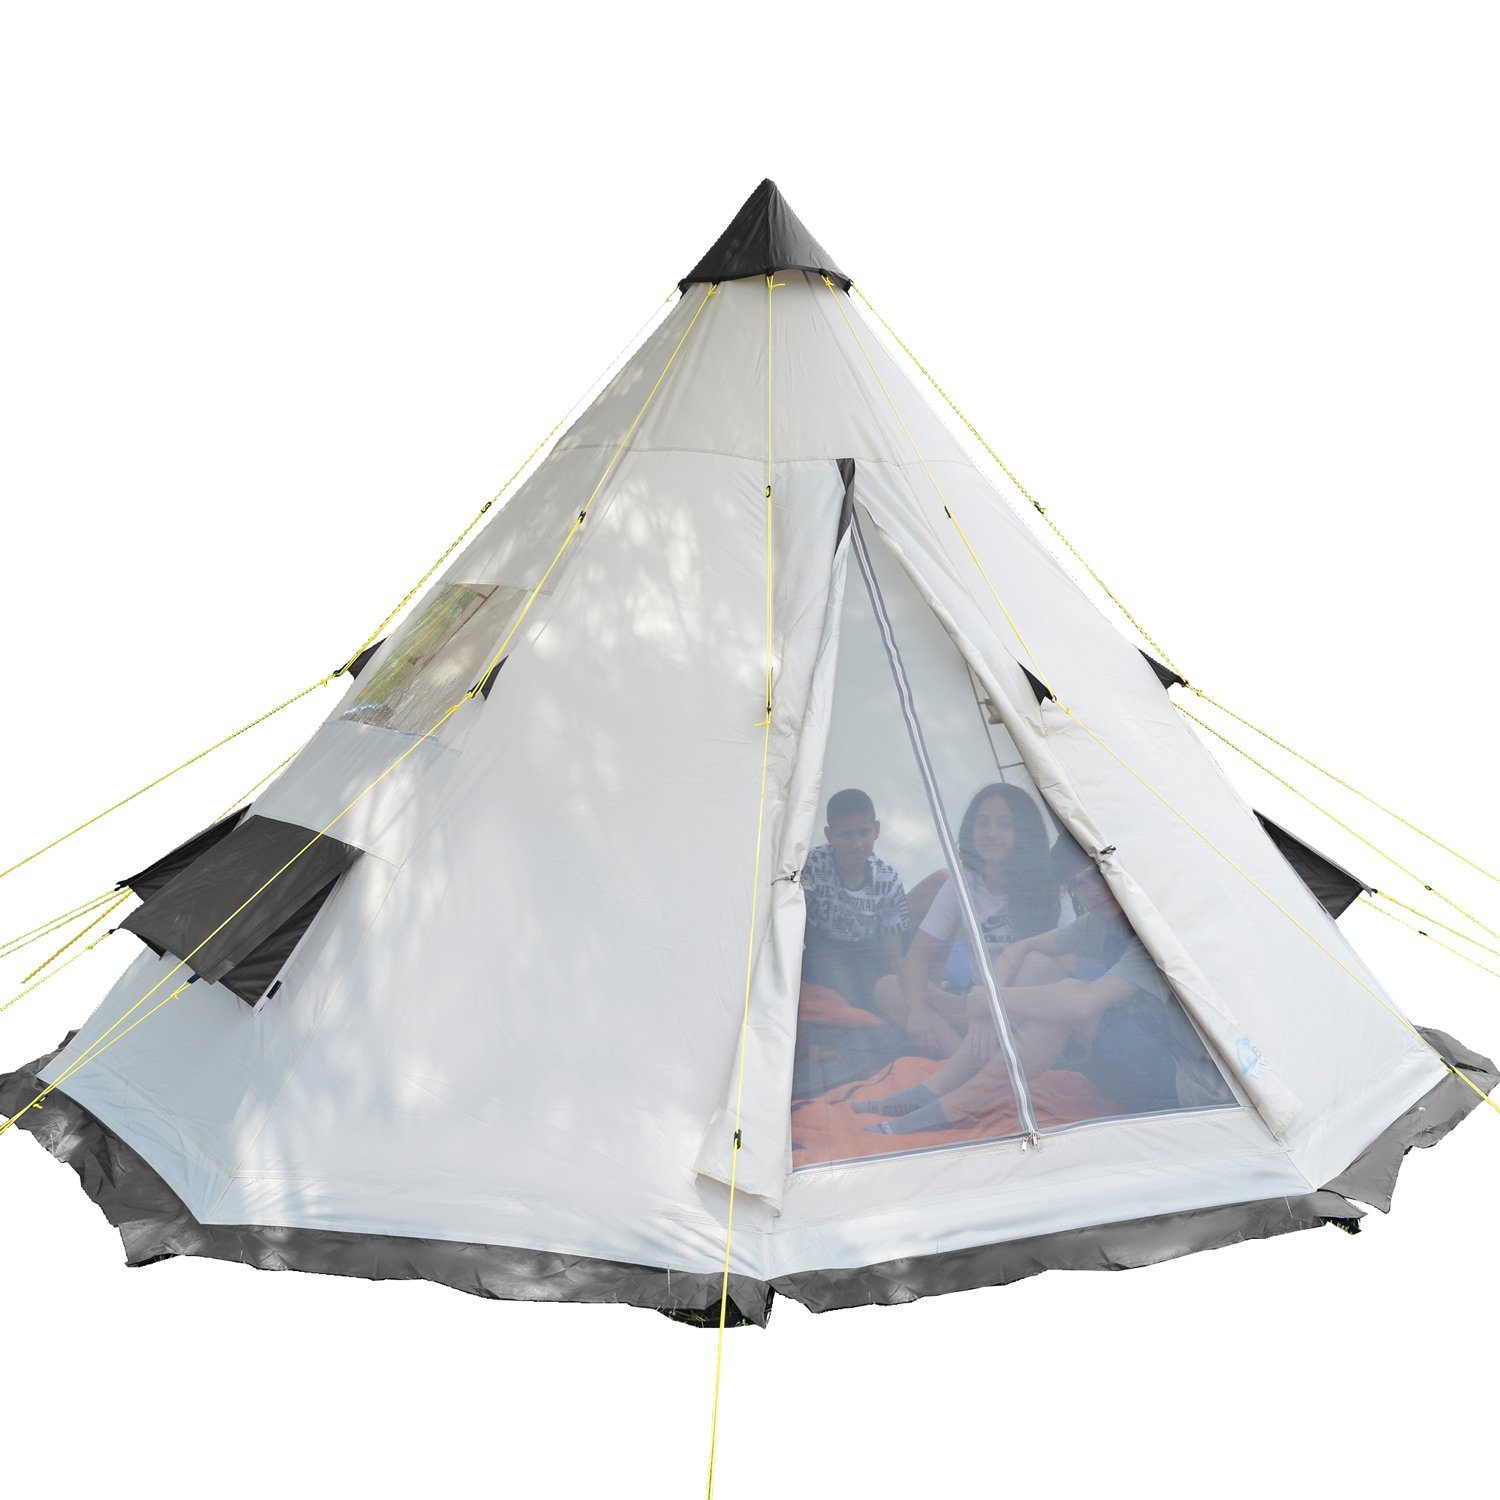 Skandika Tipi-Zelt Goathi 365 Protect 6 Zelt Outdoor, Personen: 6, Campingzelt, wasserfest, eingenähter Zeltboden